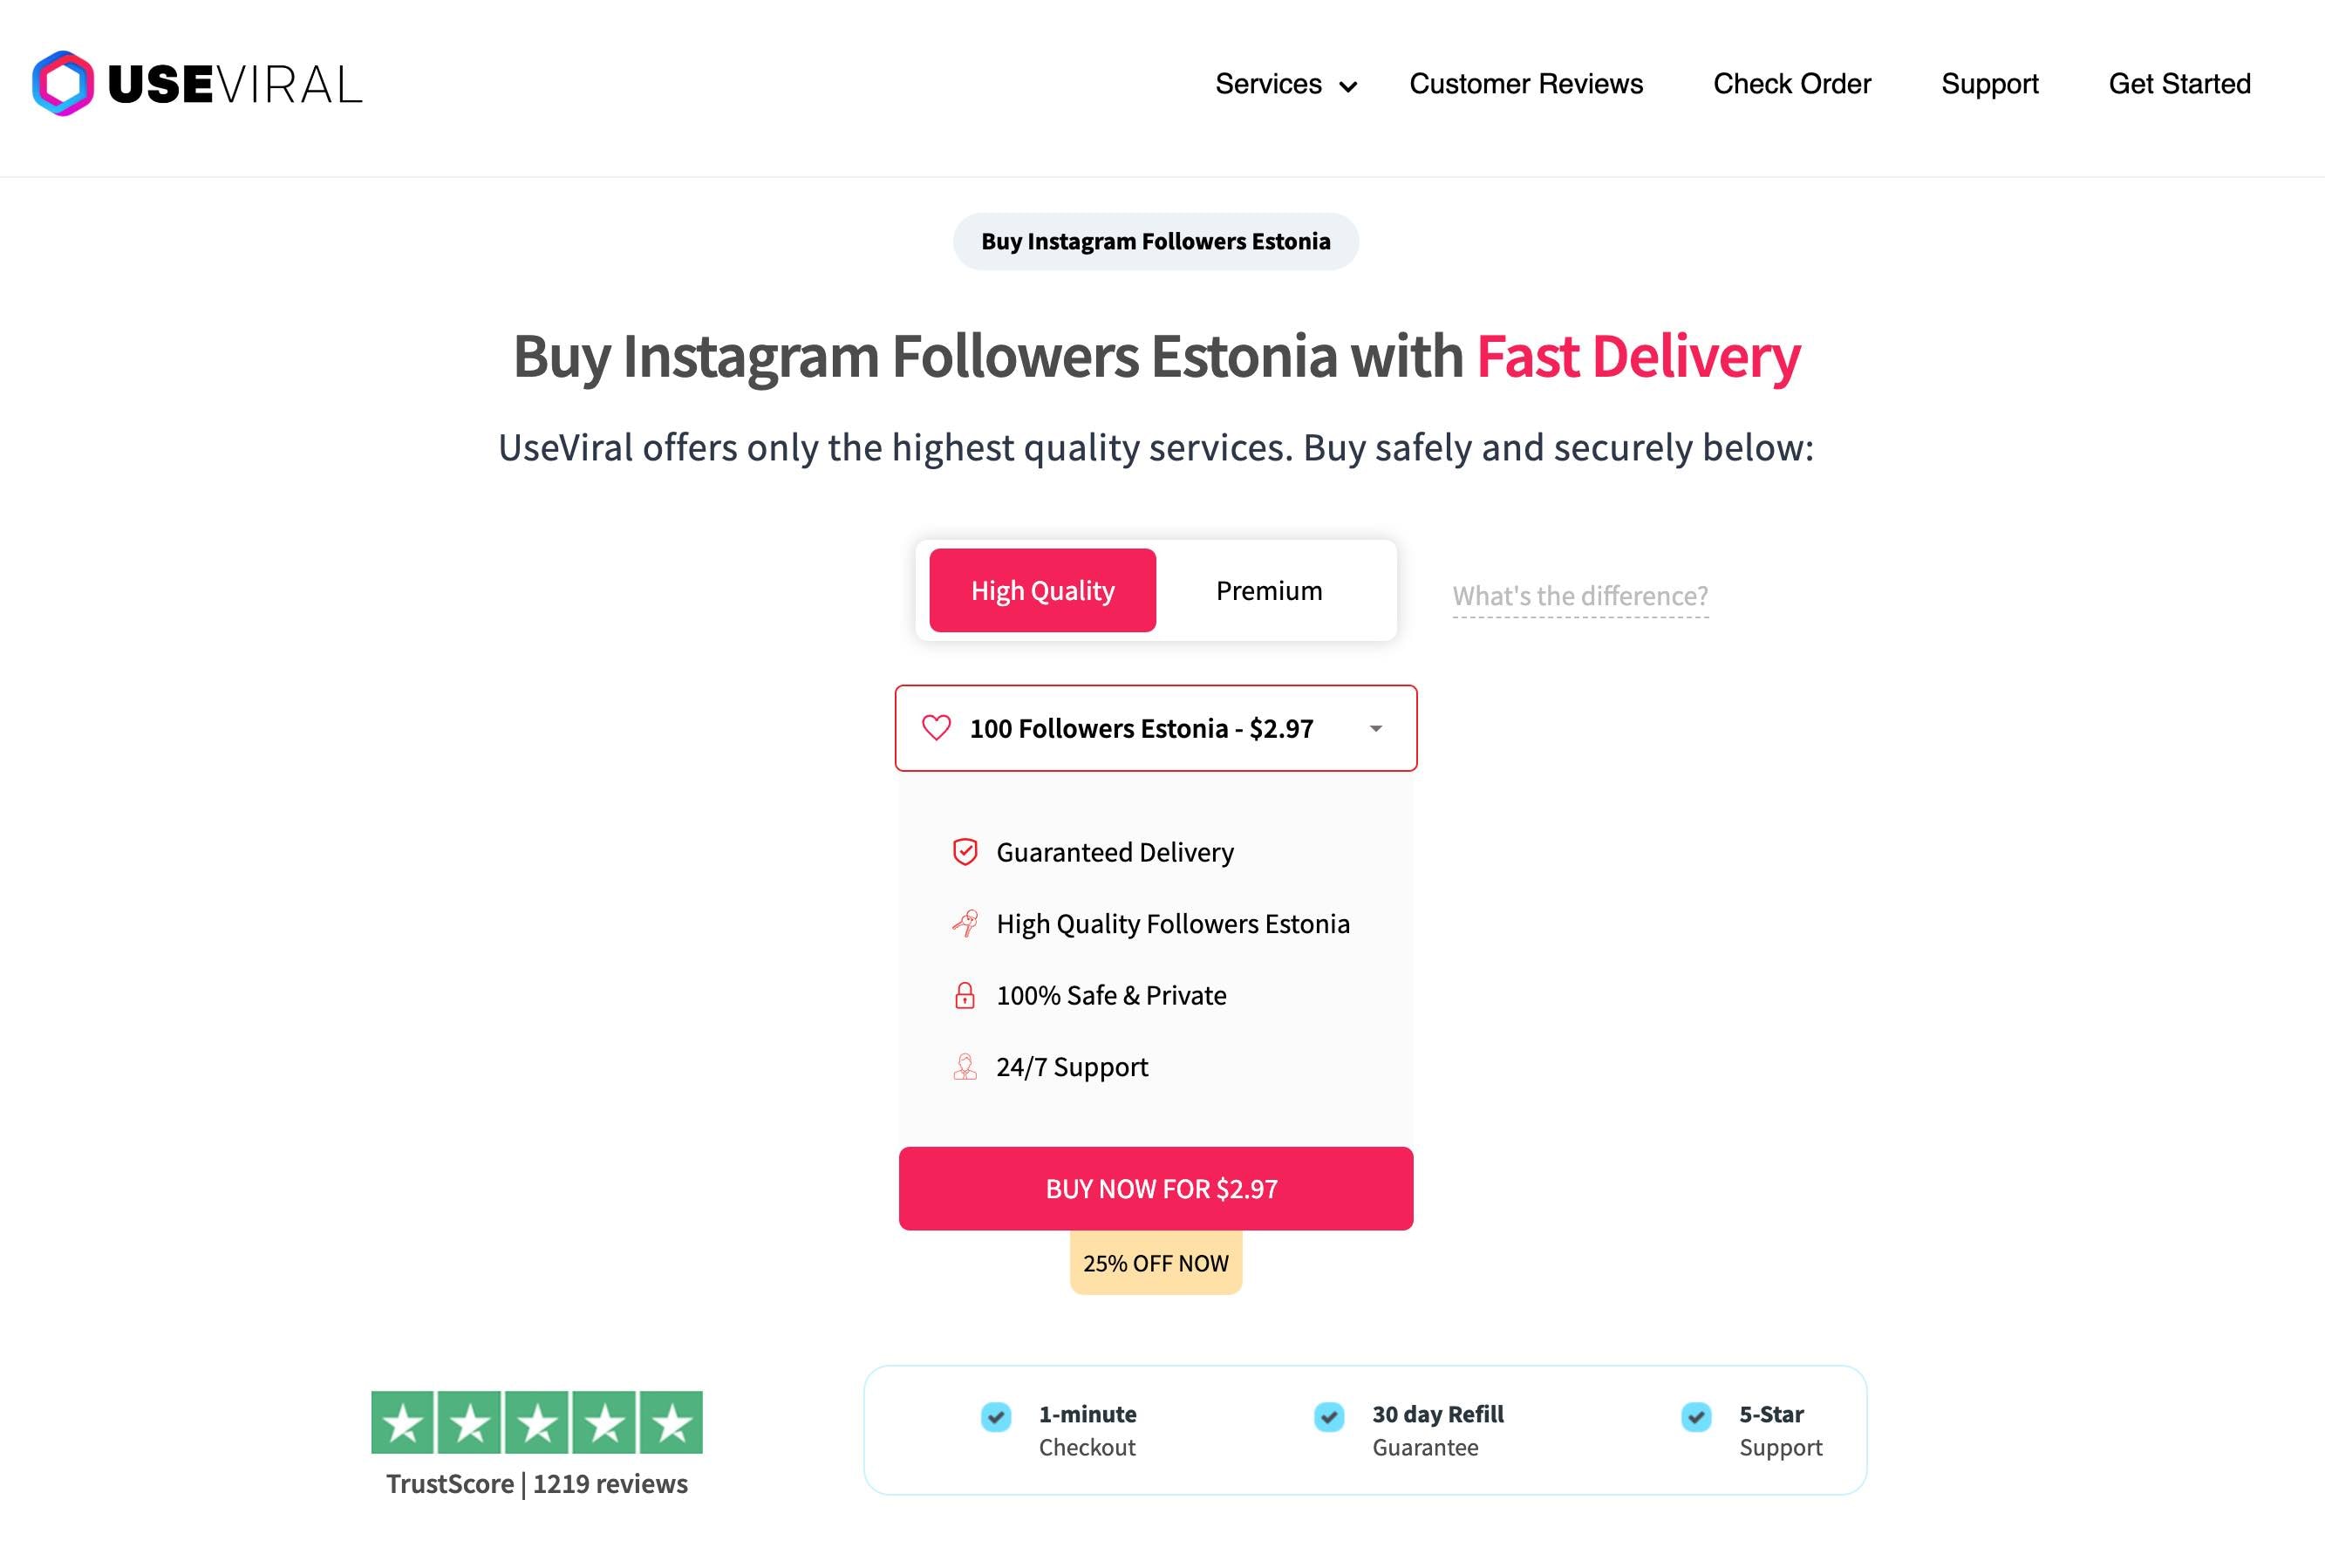 useviral buy instagram followers estonia page